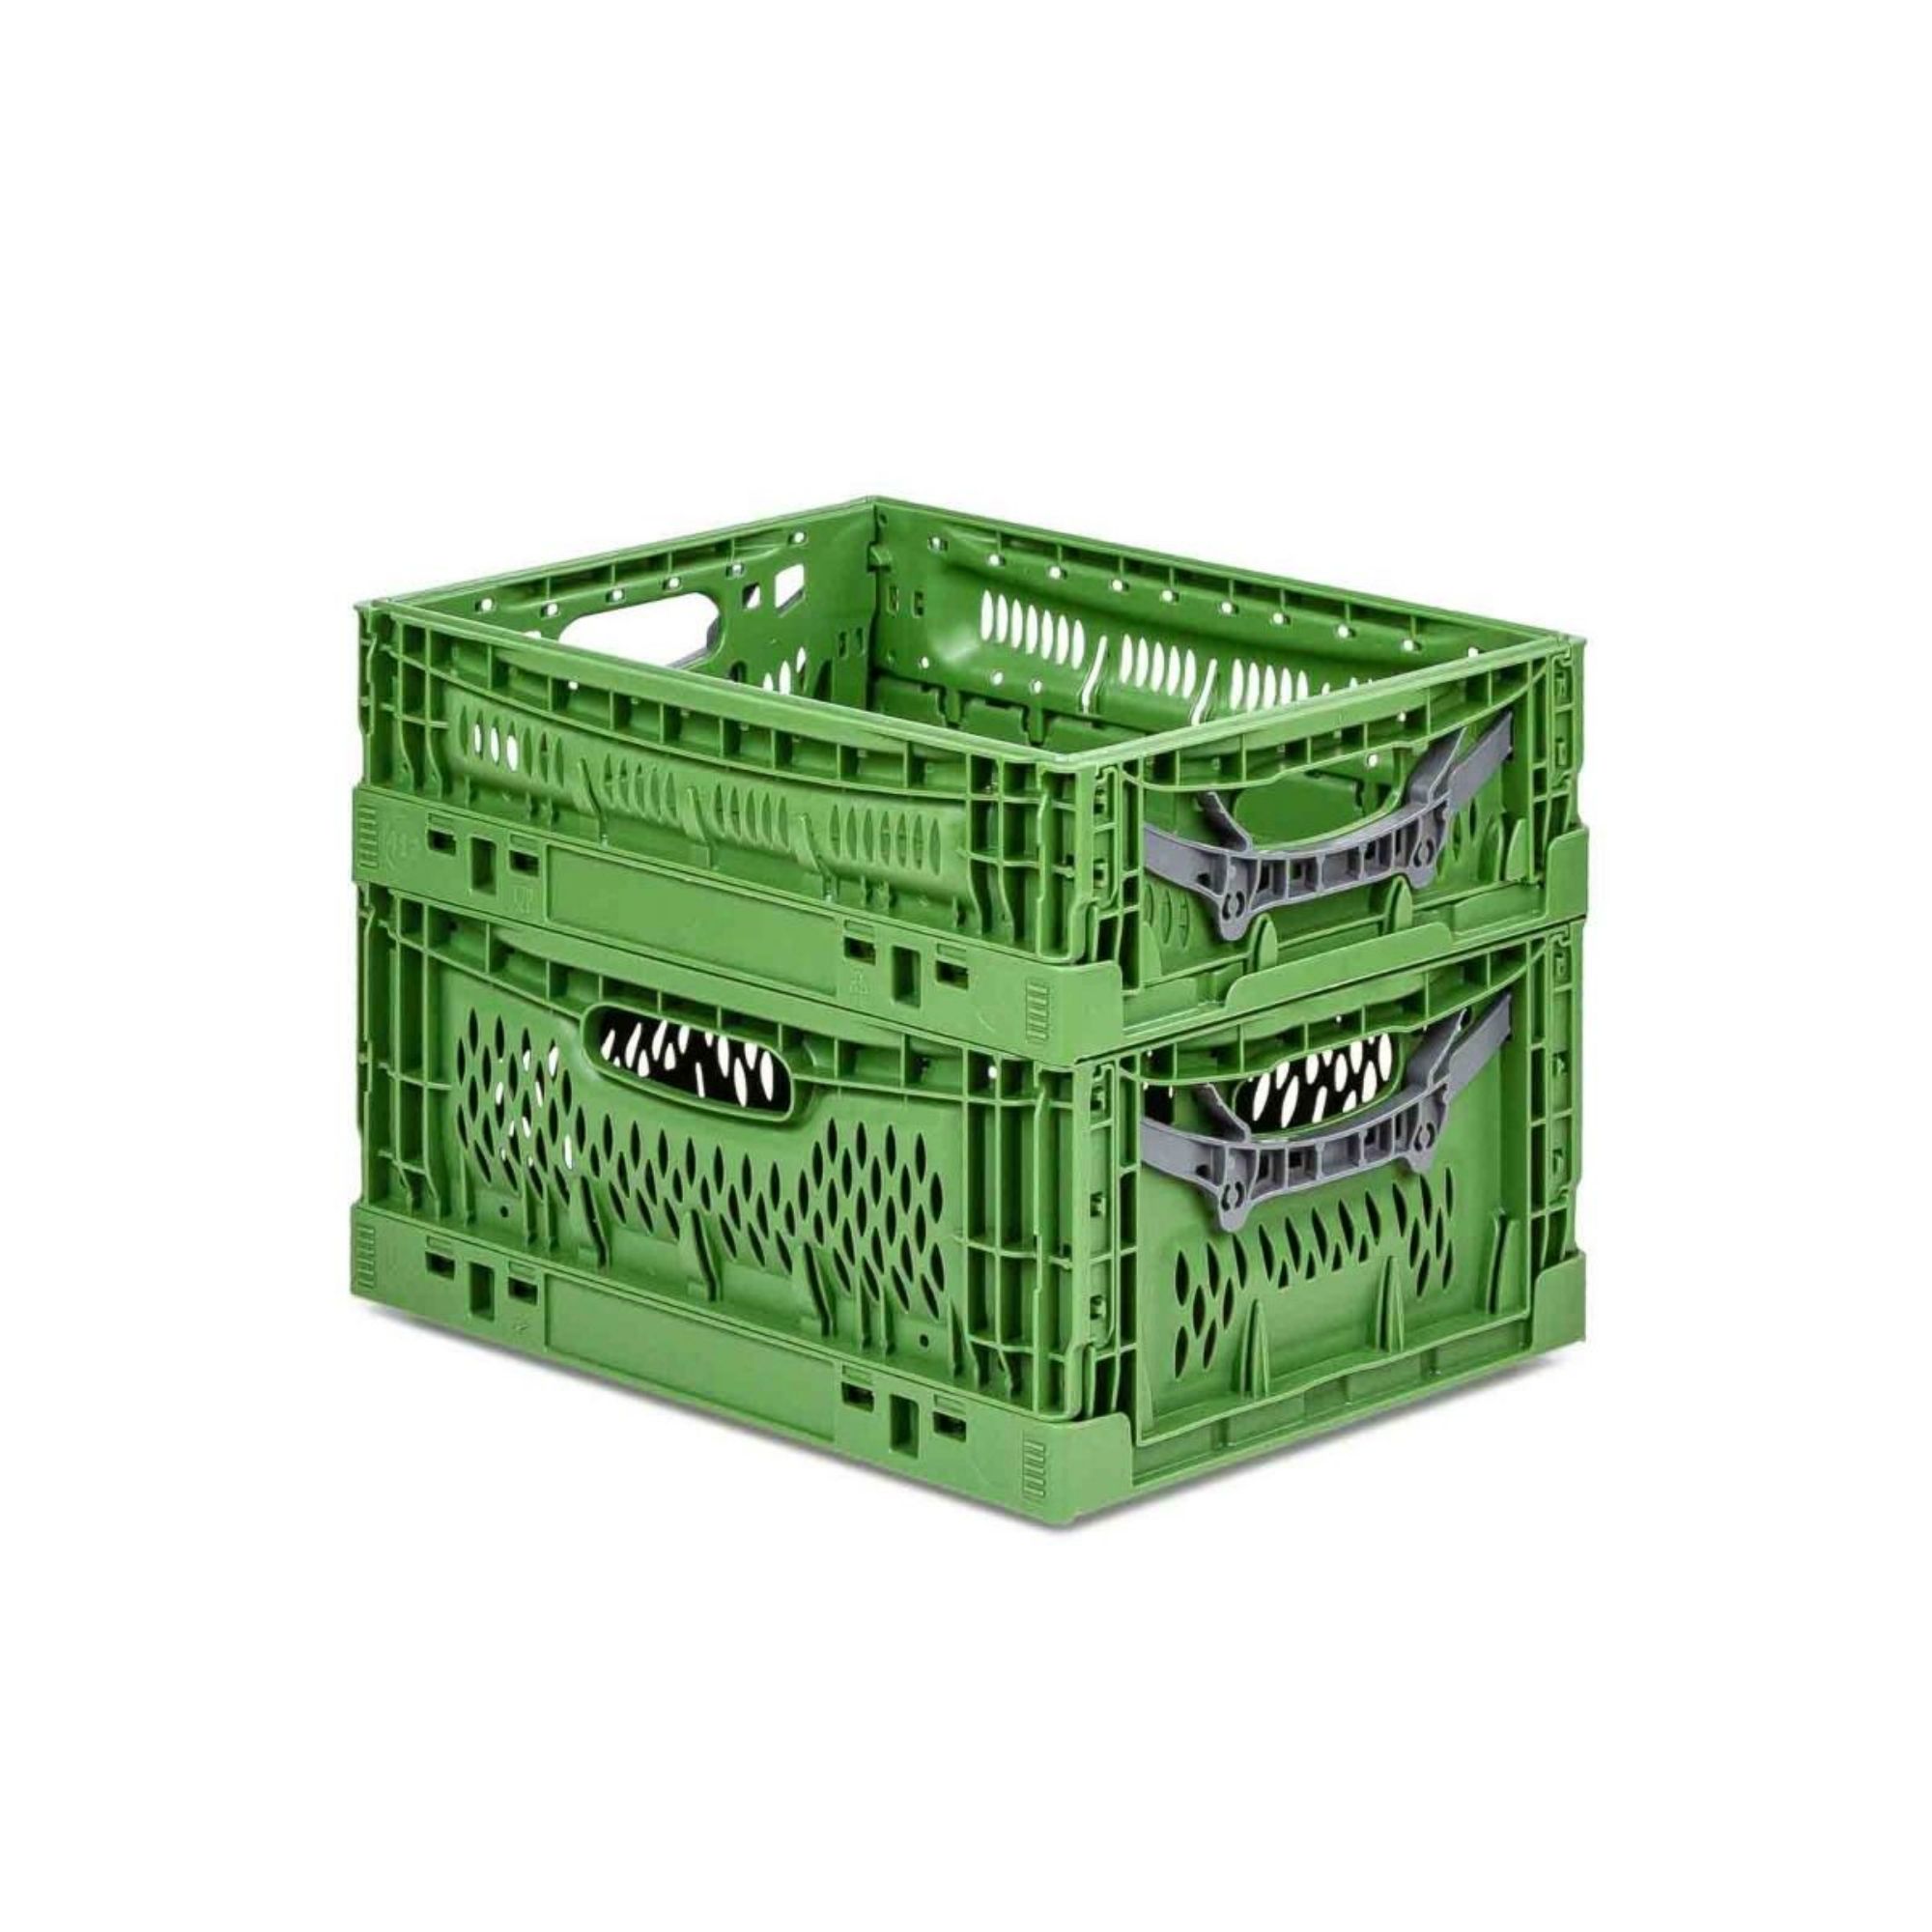 SuperSparSet 5x Stabile Profi-Klappbox Chameleon in Industriequalität | HxBxT 23x40x60cm | 45 Liter | klappbar stapelbar durchbrochen lebensmittelecht | Eurobox Eurobehälter Transportbehälter Stapelbehlter Faltbox